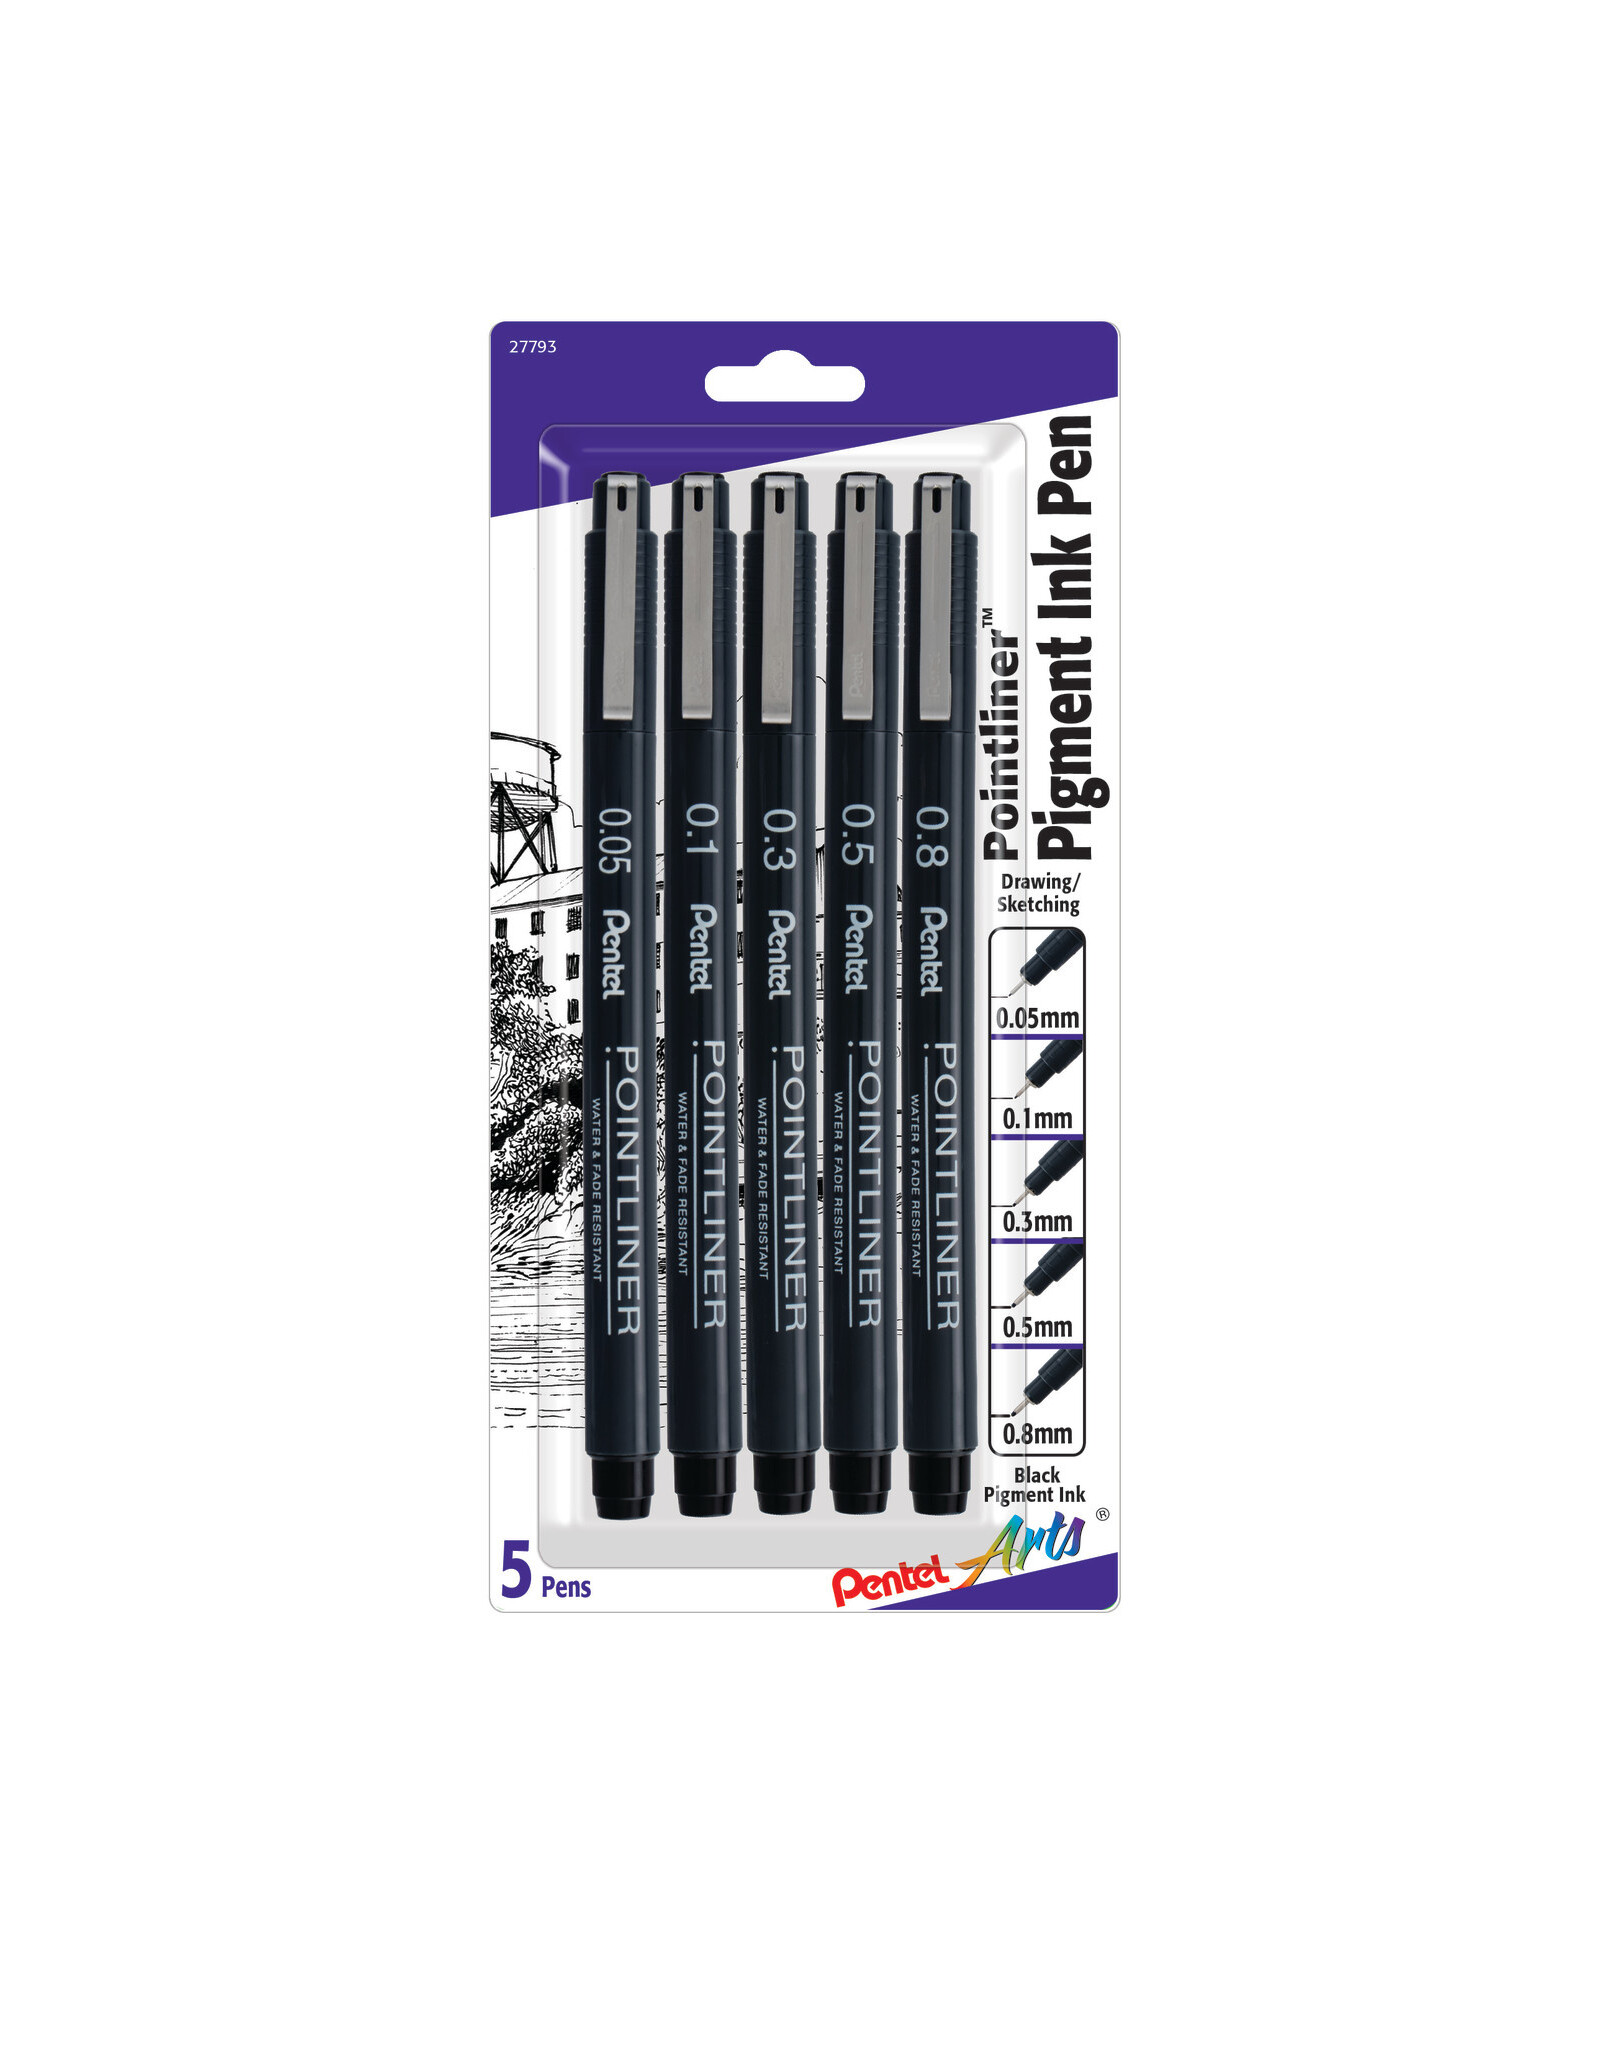 Pentel Pentel Arts Pointliner Pen, 5-Pack, Assorted Sizes, Black Ink